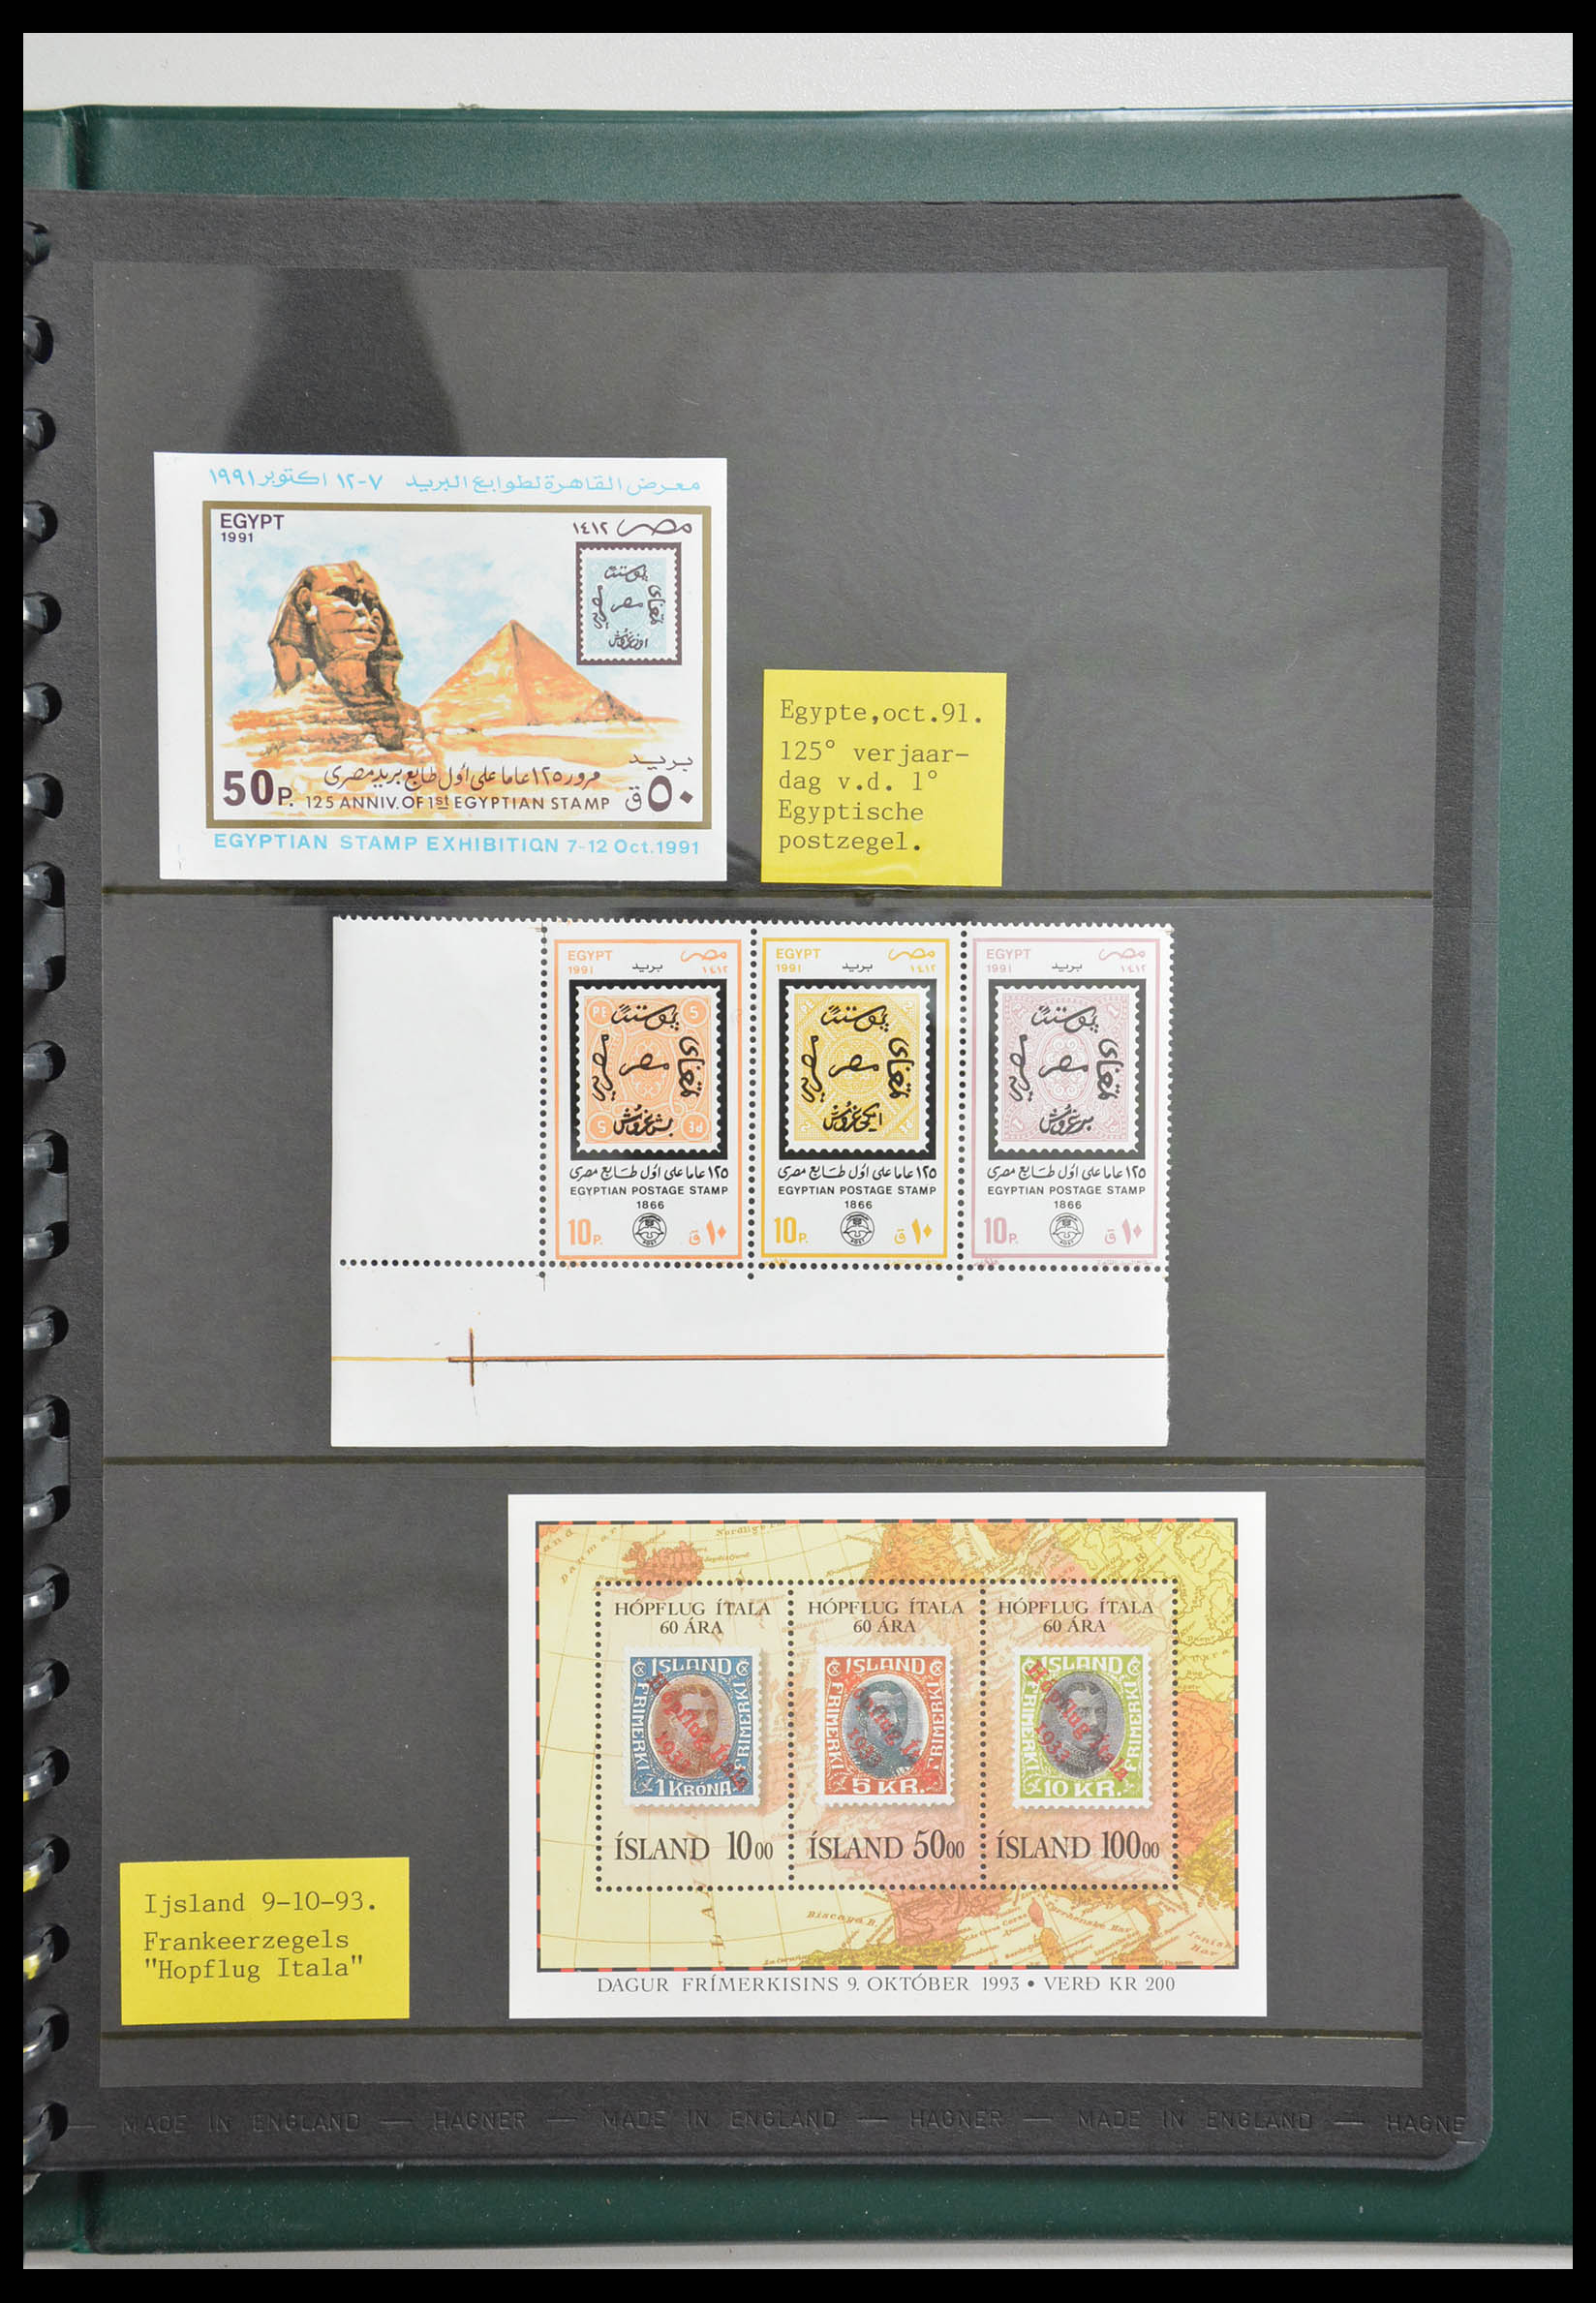 28337 132 - 28337 Postzegel op postzegel 1840-2001.